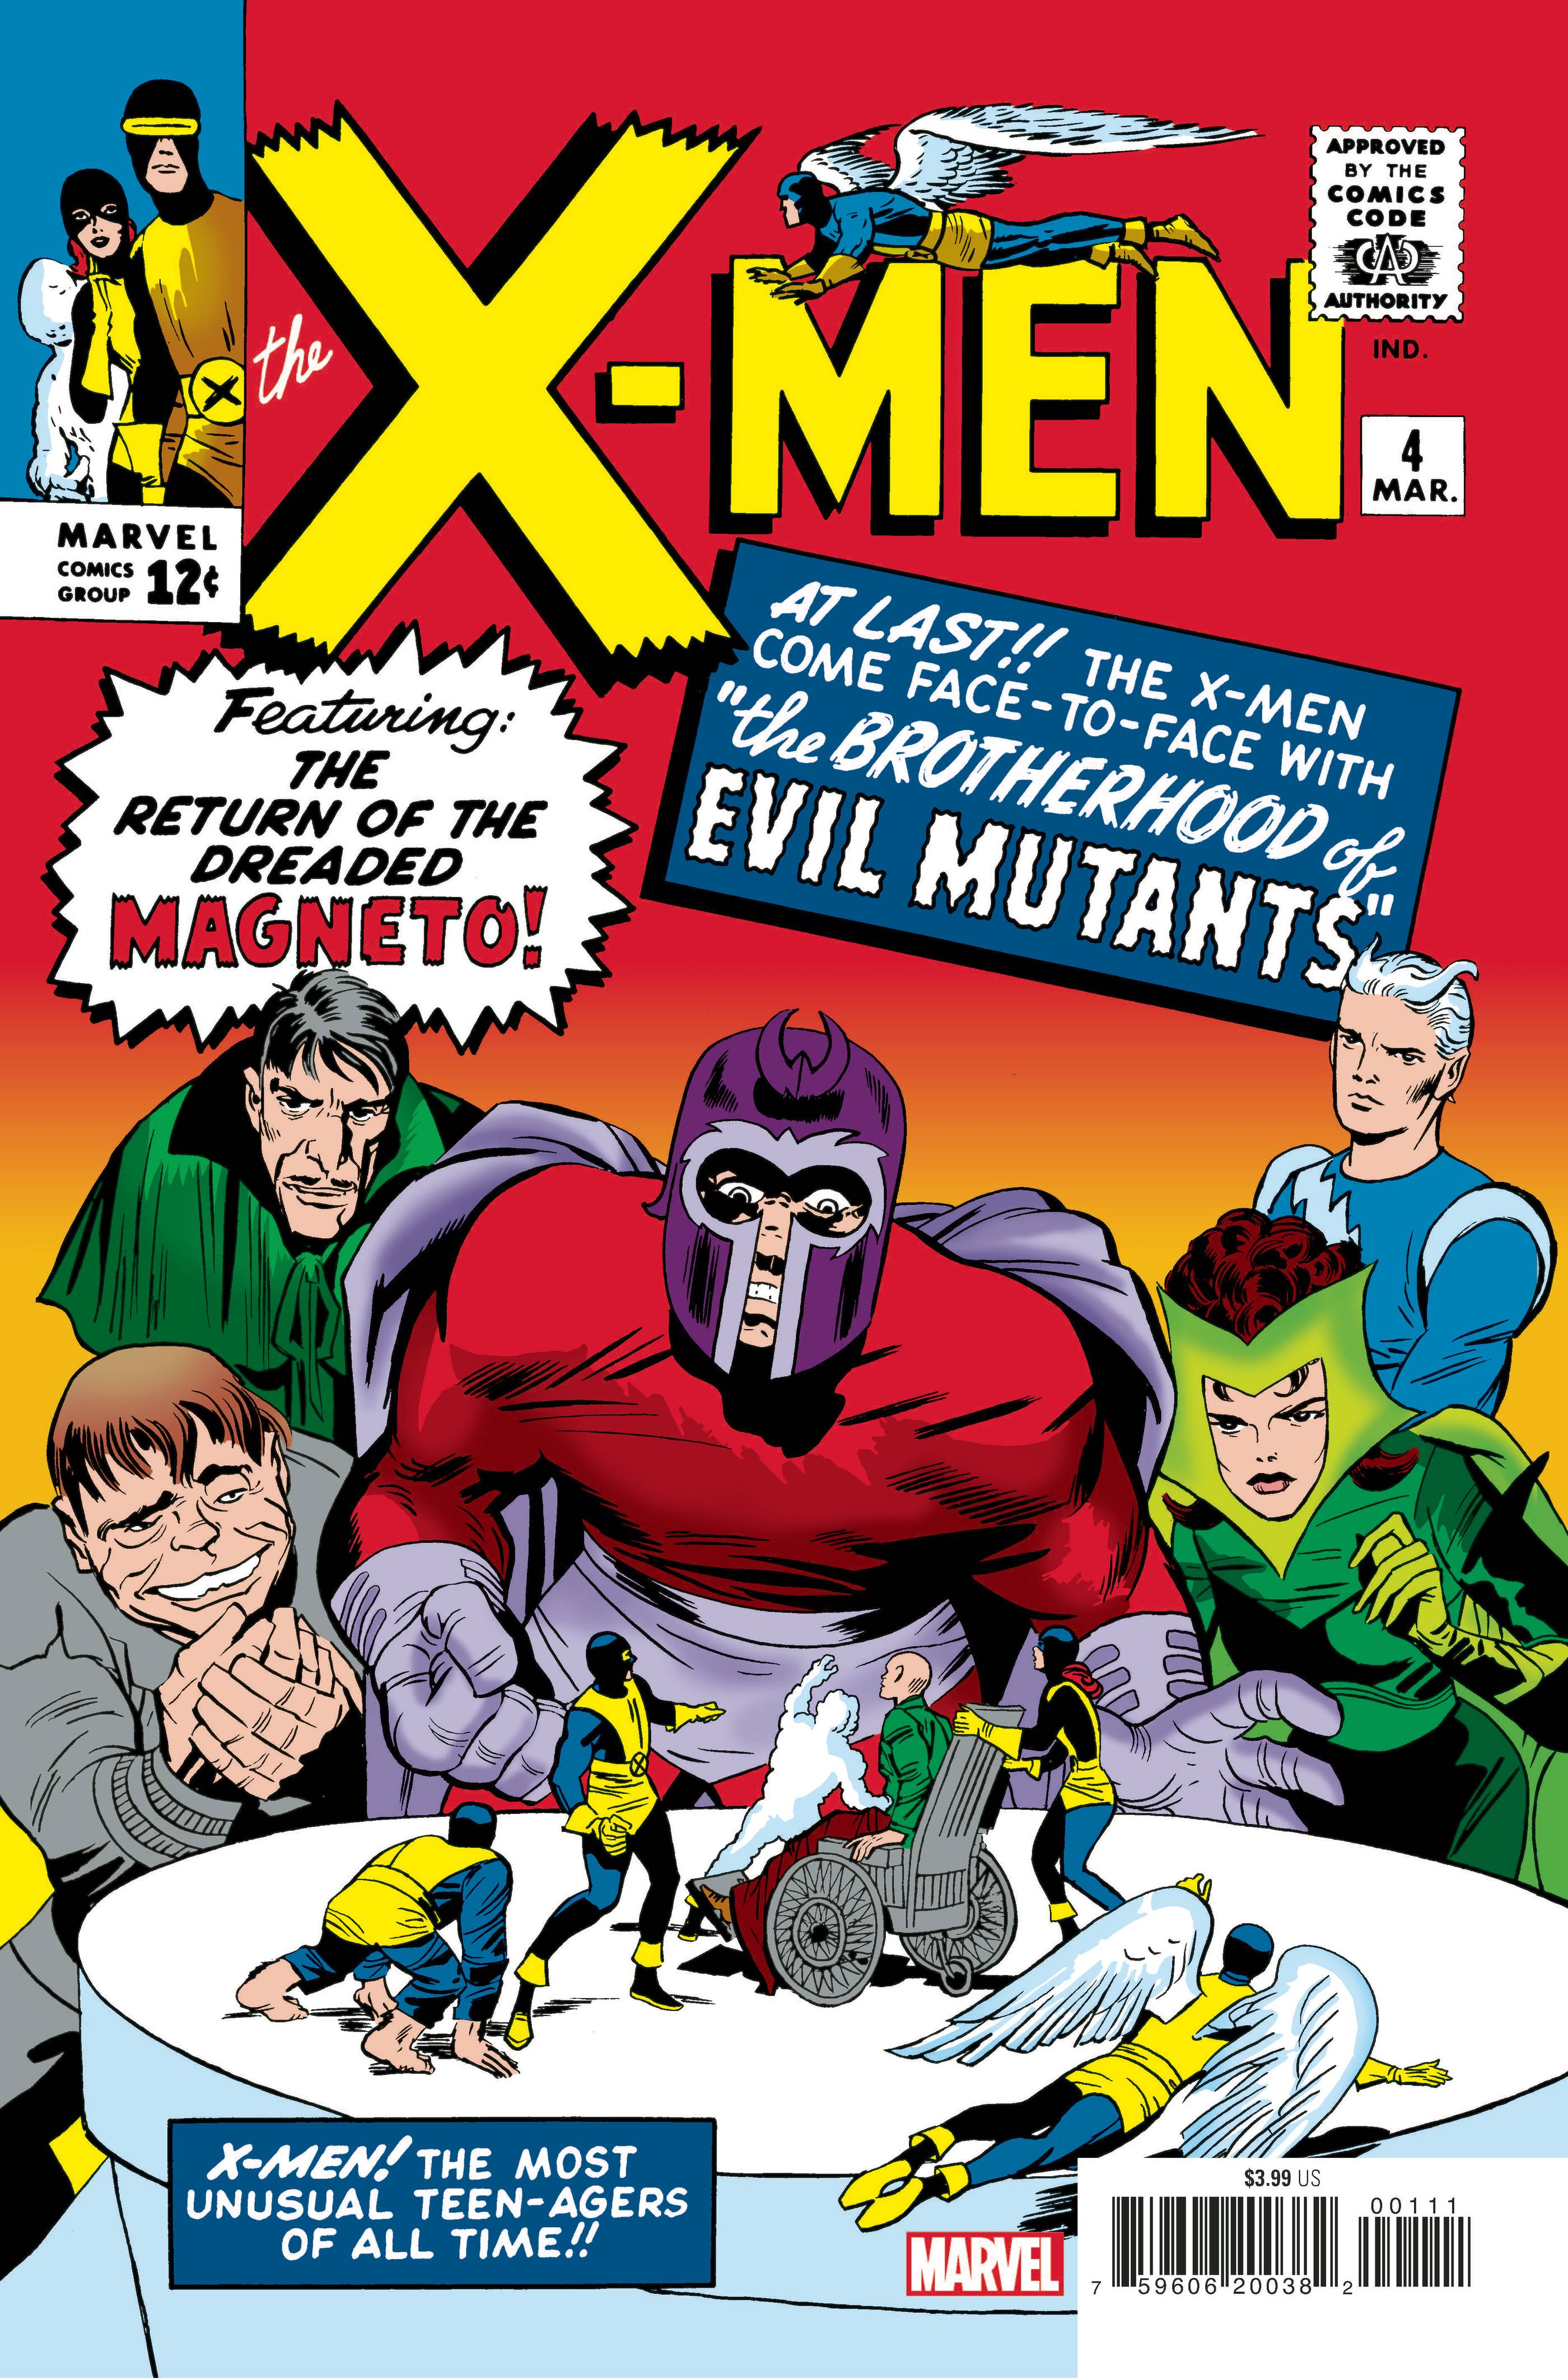 X-MEN #4 FACSIMILE EDITION